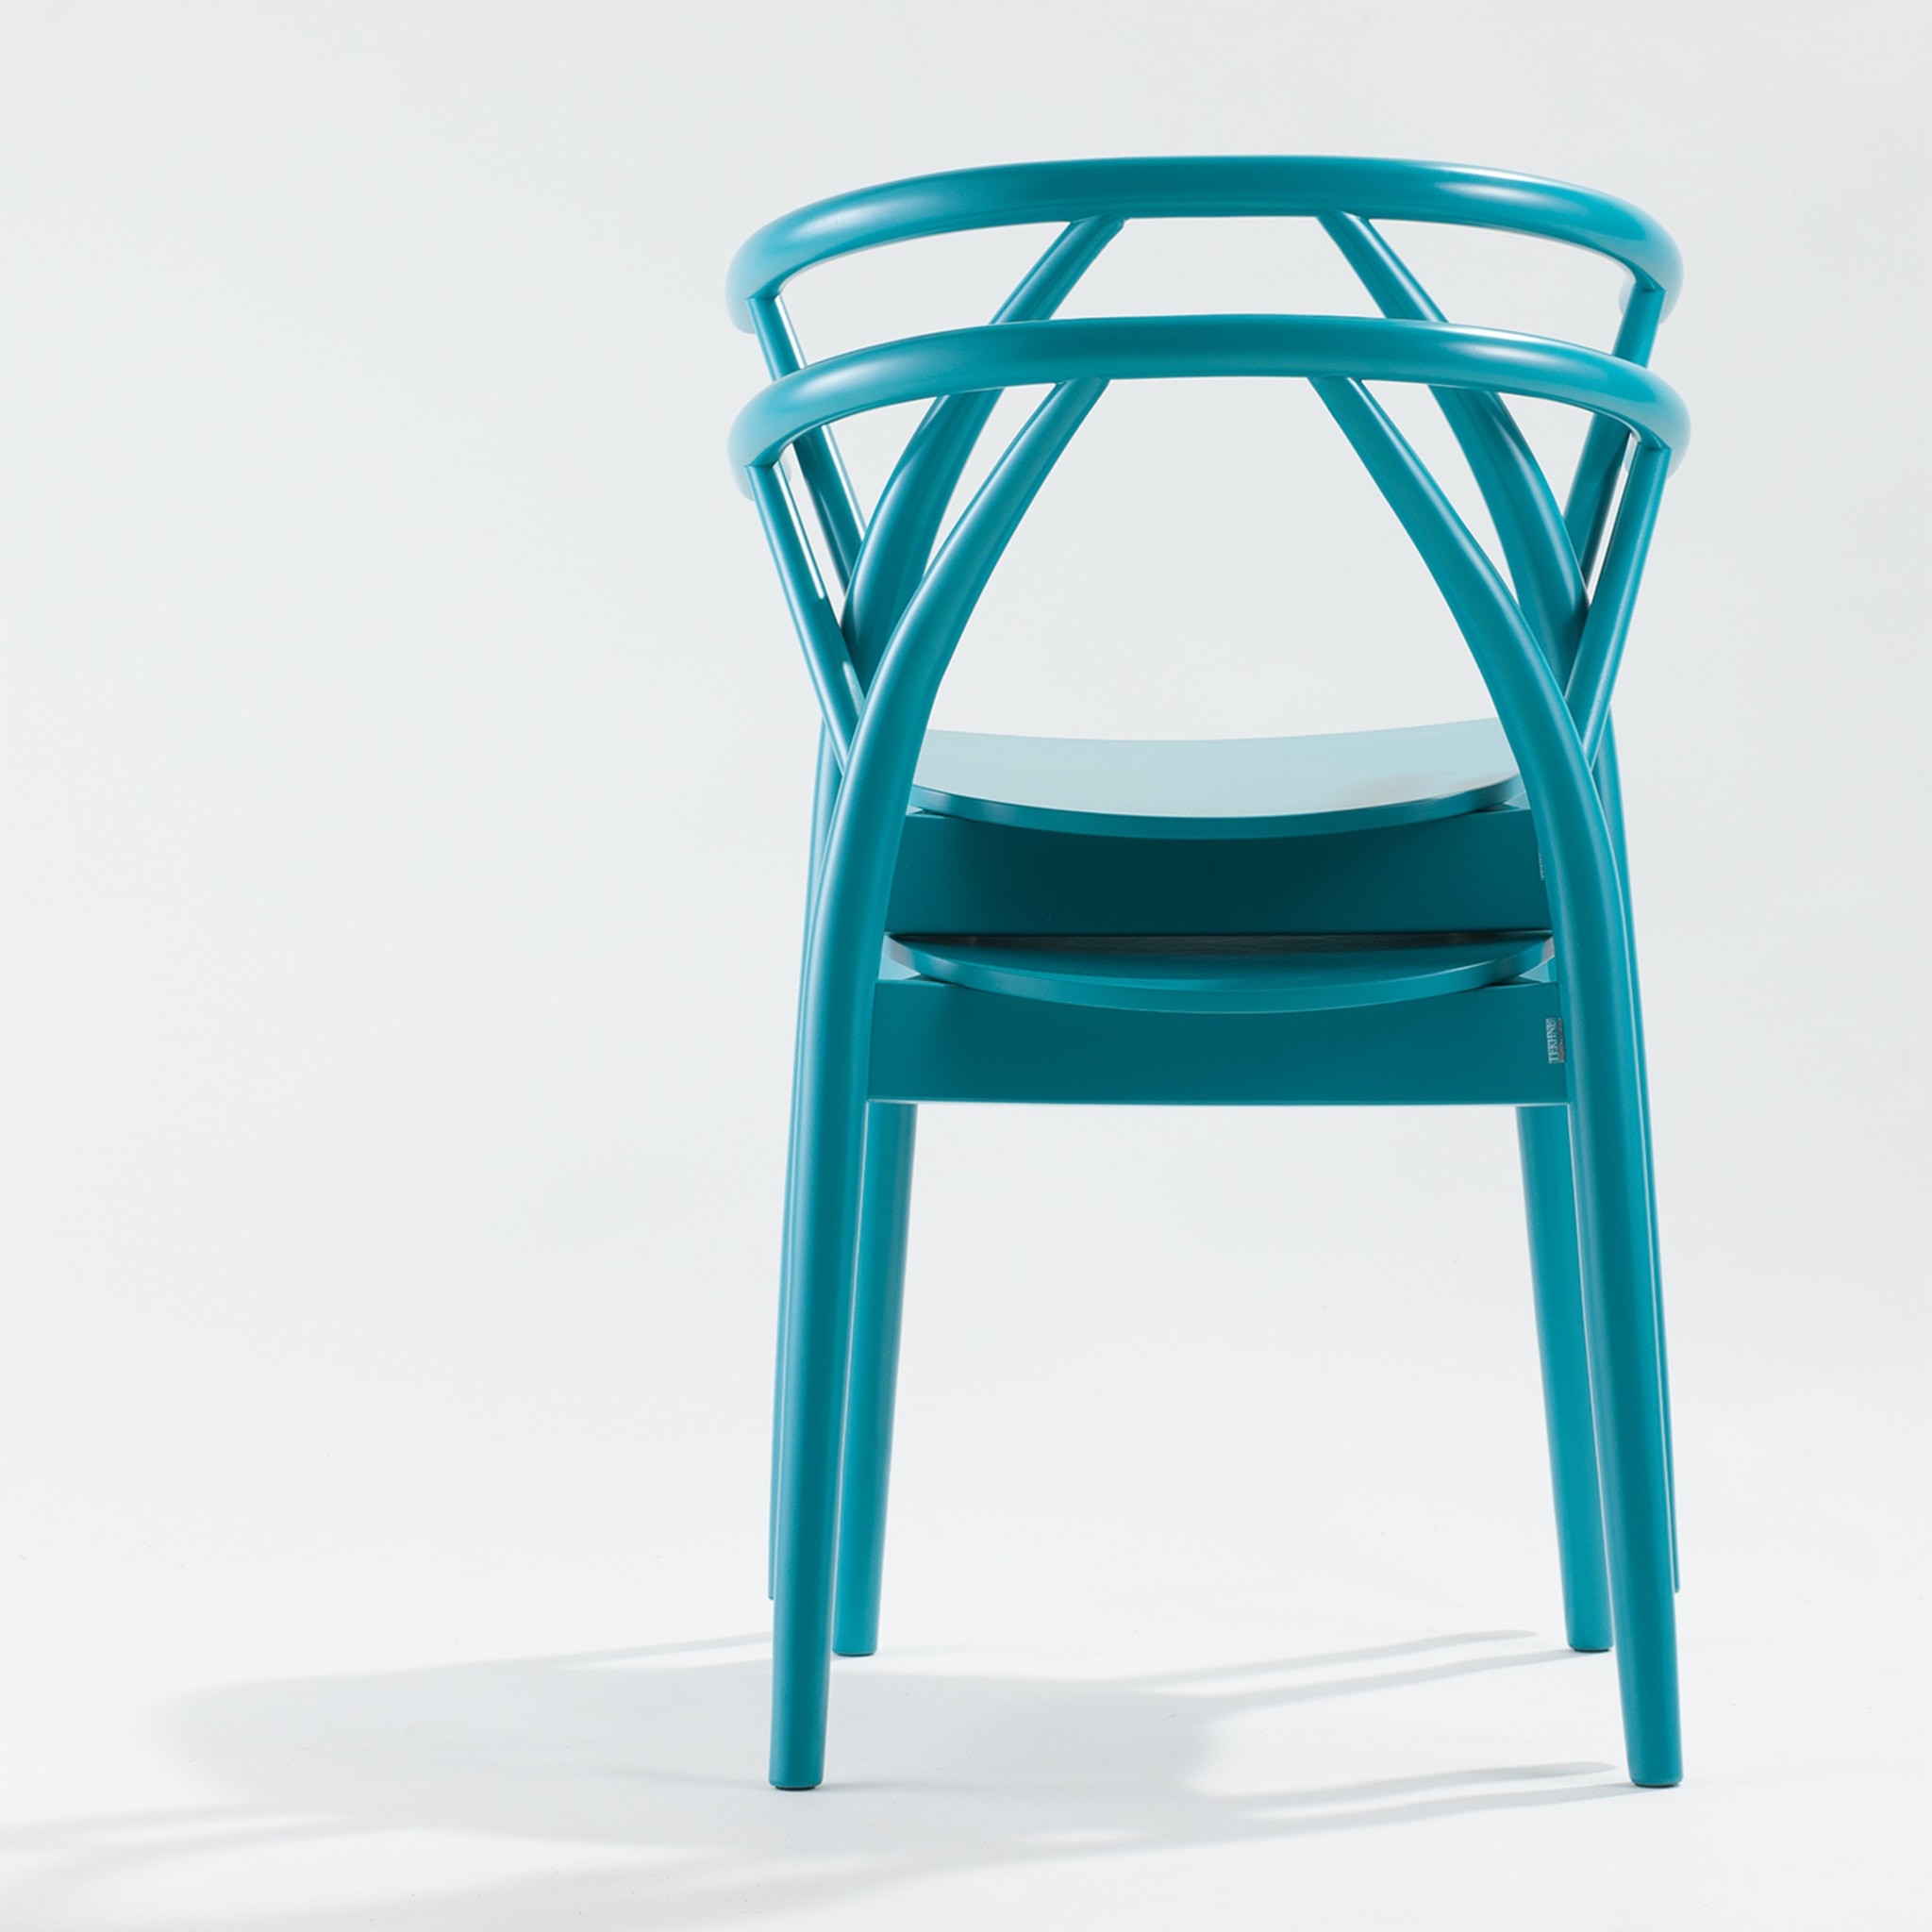 Yelly 971 Light Blue Chair by Markus Johansson - Alternative view 1